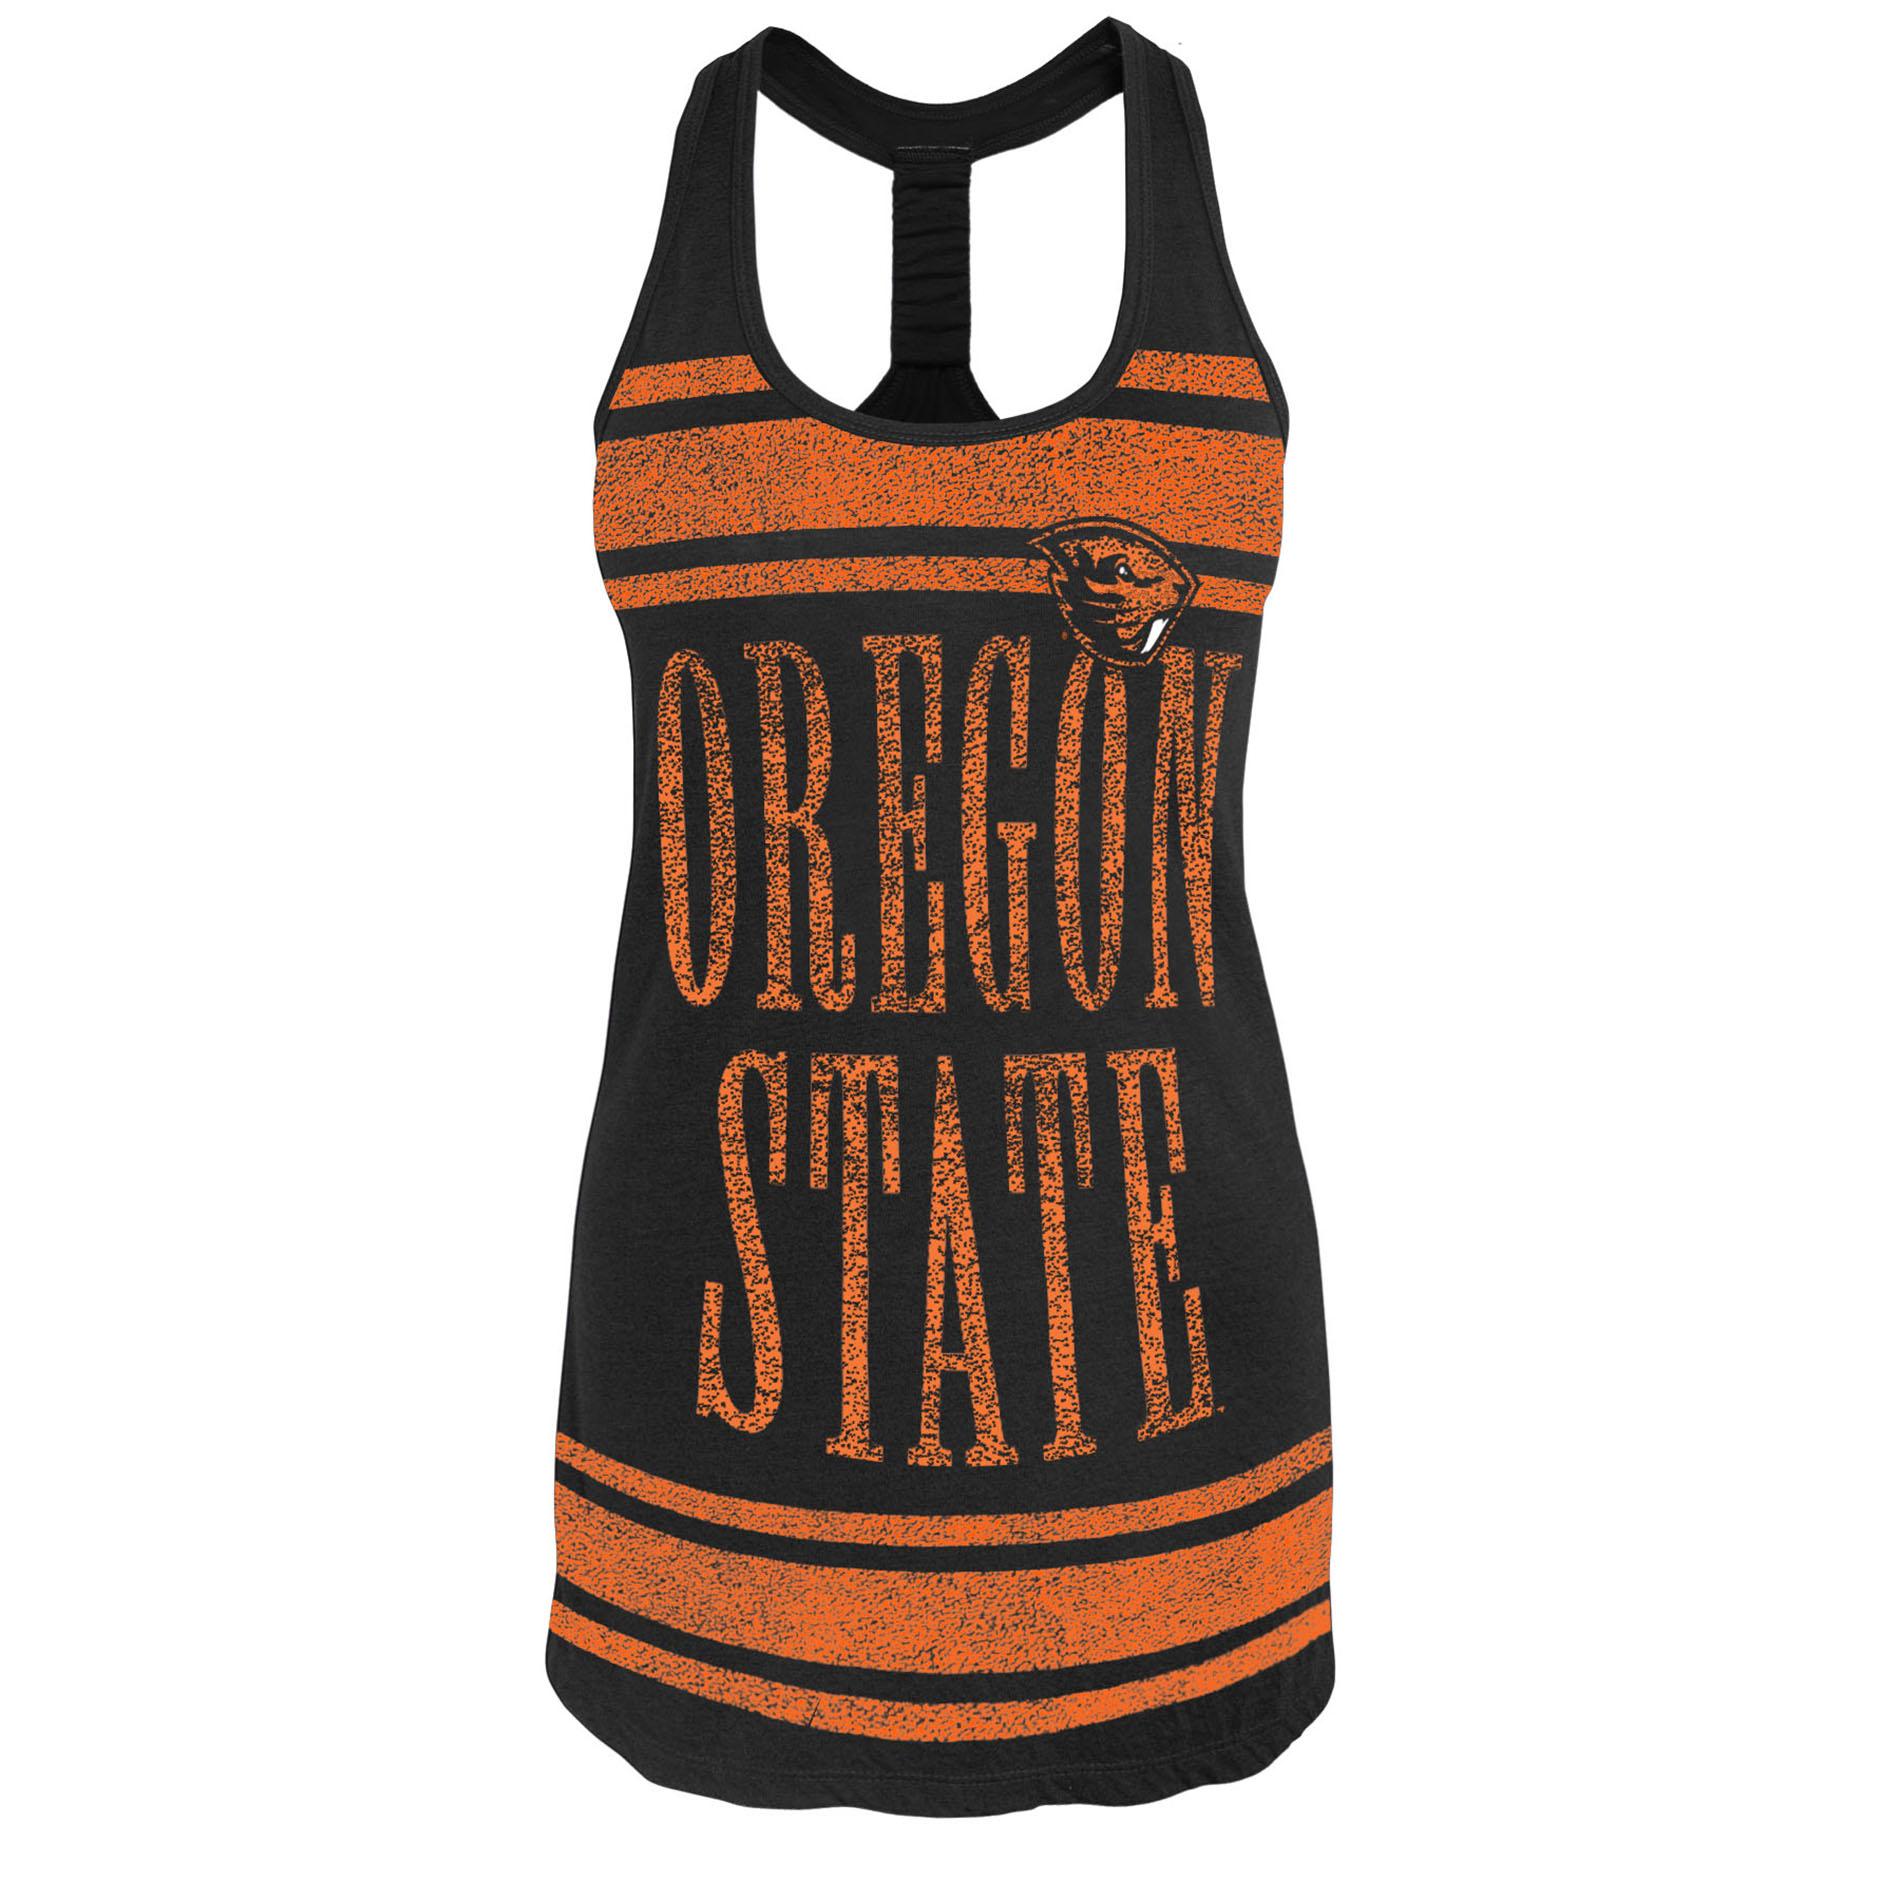 NCAA Women's Sleeveless Top - Oregon State University